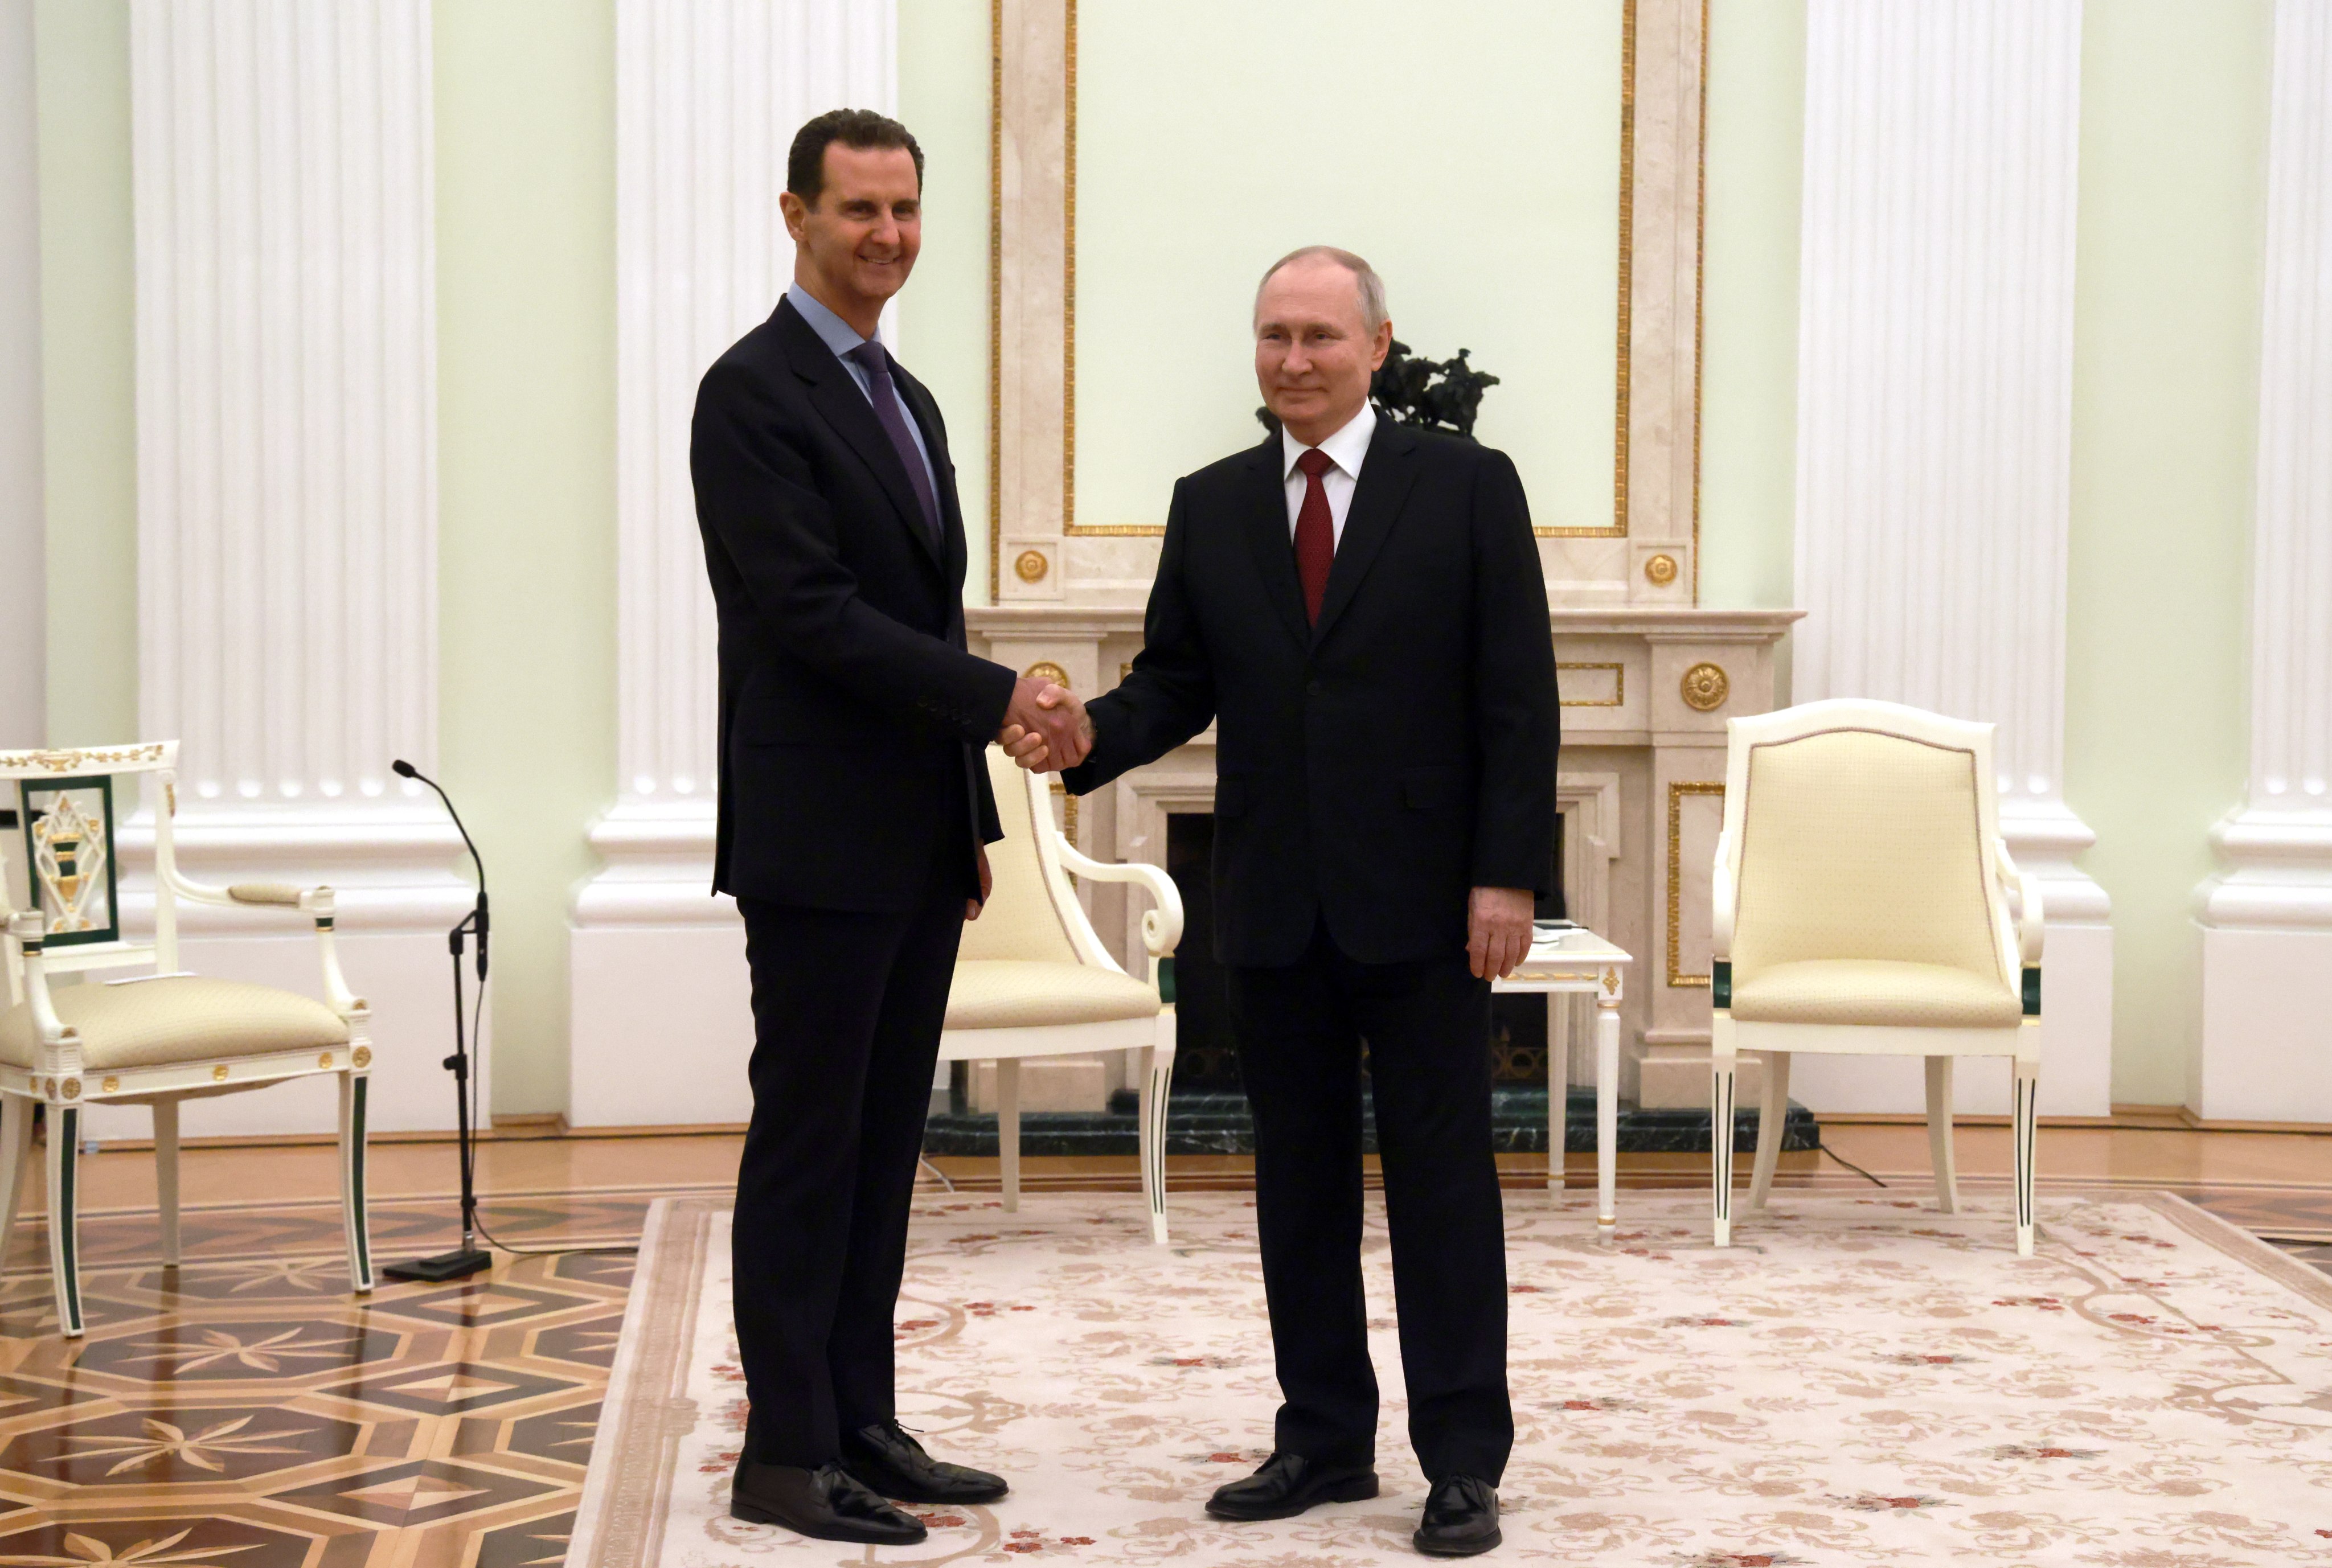 Russian President Vladimir Putin, right, and Syrian President Bashar al-Assad during their meeting at the Kremlin in Moscow, Russia on Wednesday. Photo: Vladimir Gerdo / Sputnik / Kremlin / EPA-EFE